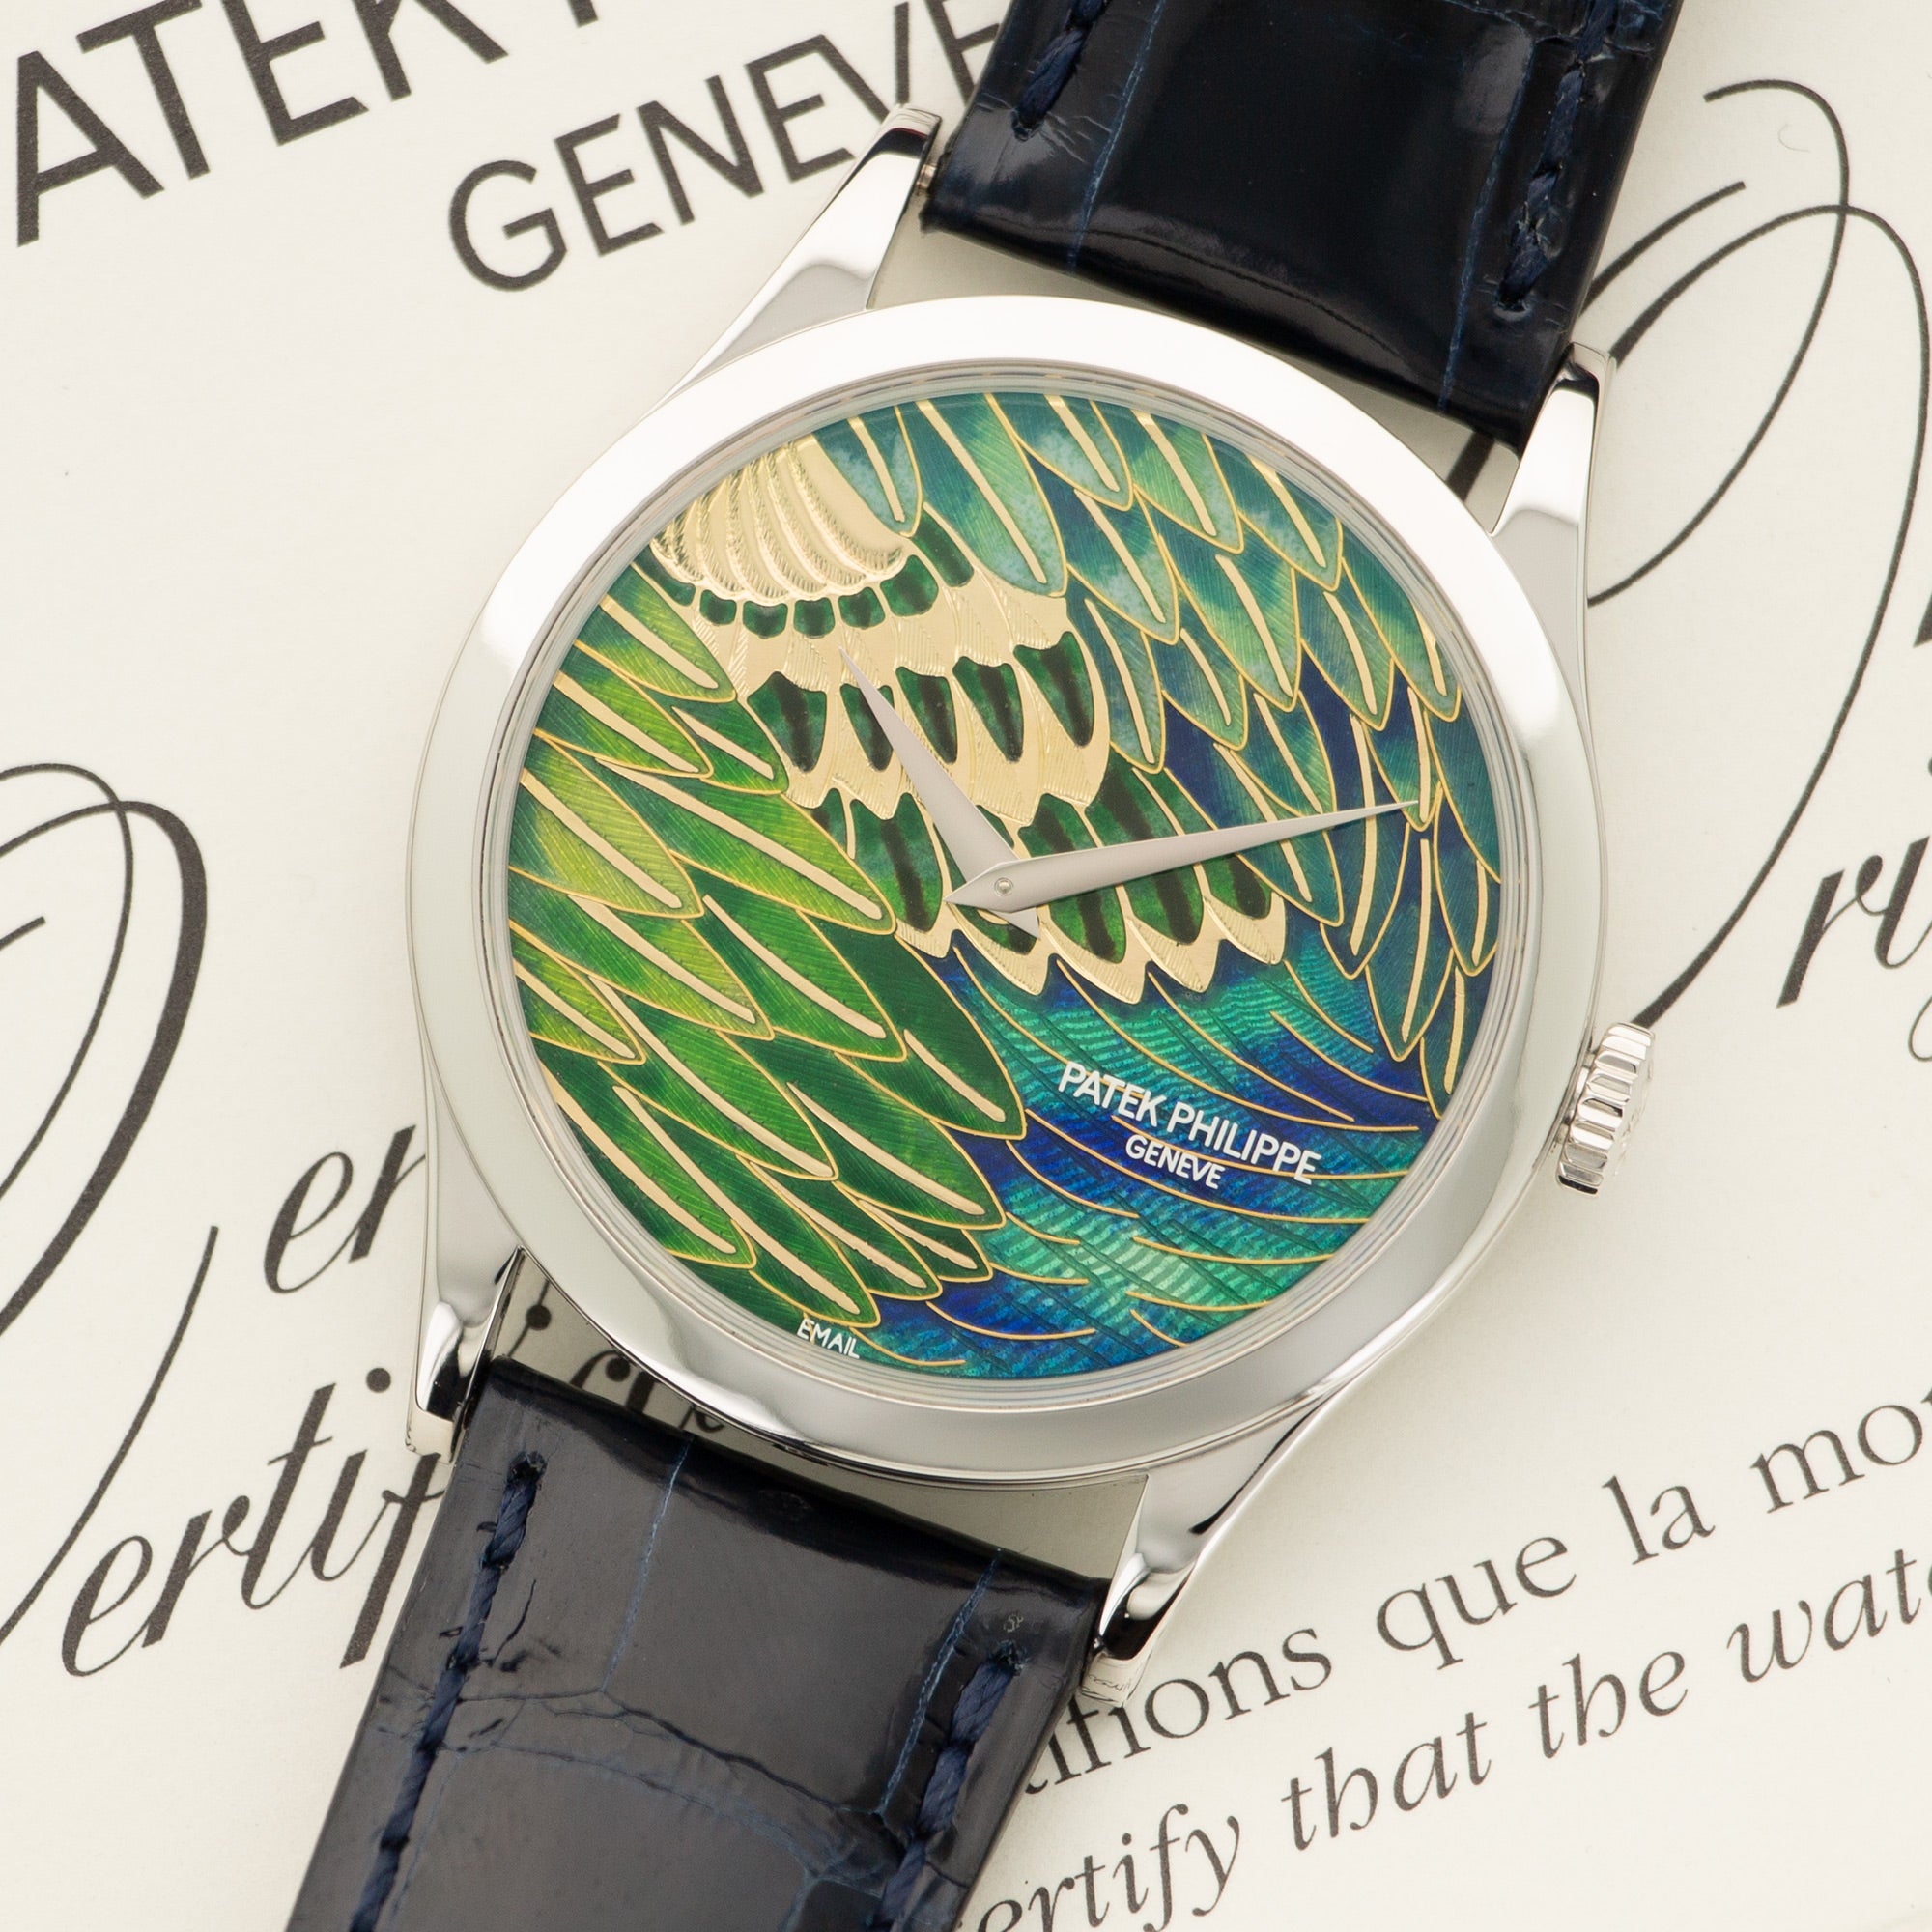 Patek Philippe - Patek Philippe Platinum Cloisonne Dial Watch Ref. 5077 - The Keystone Watches